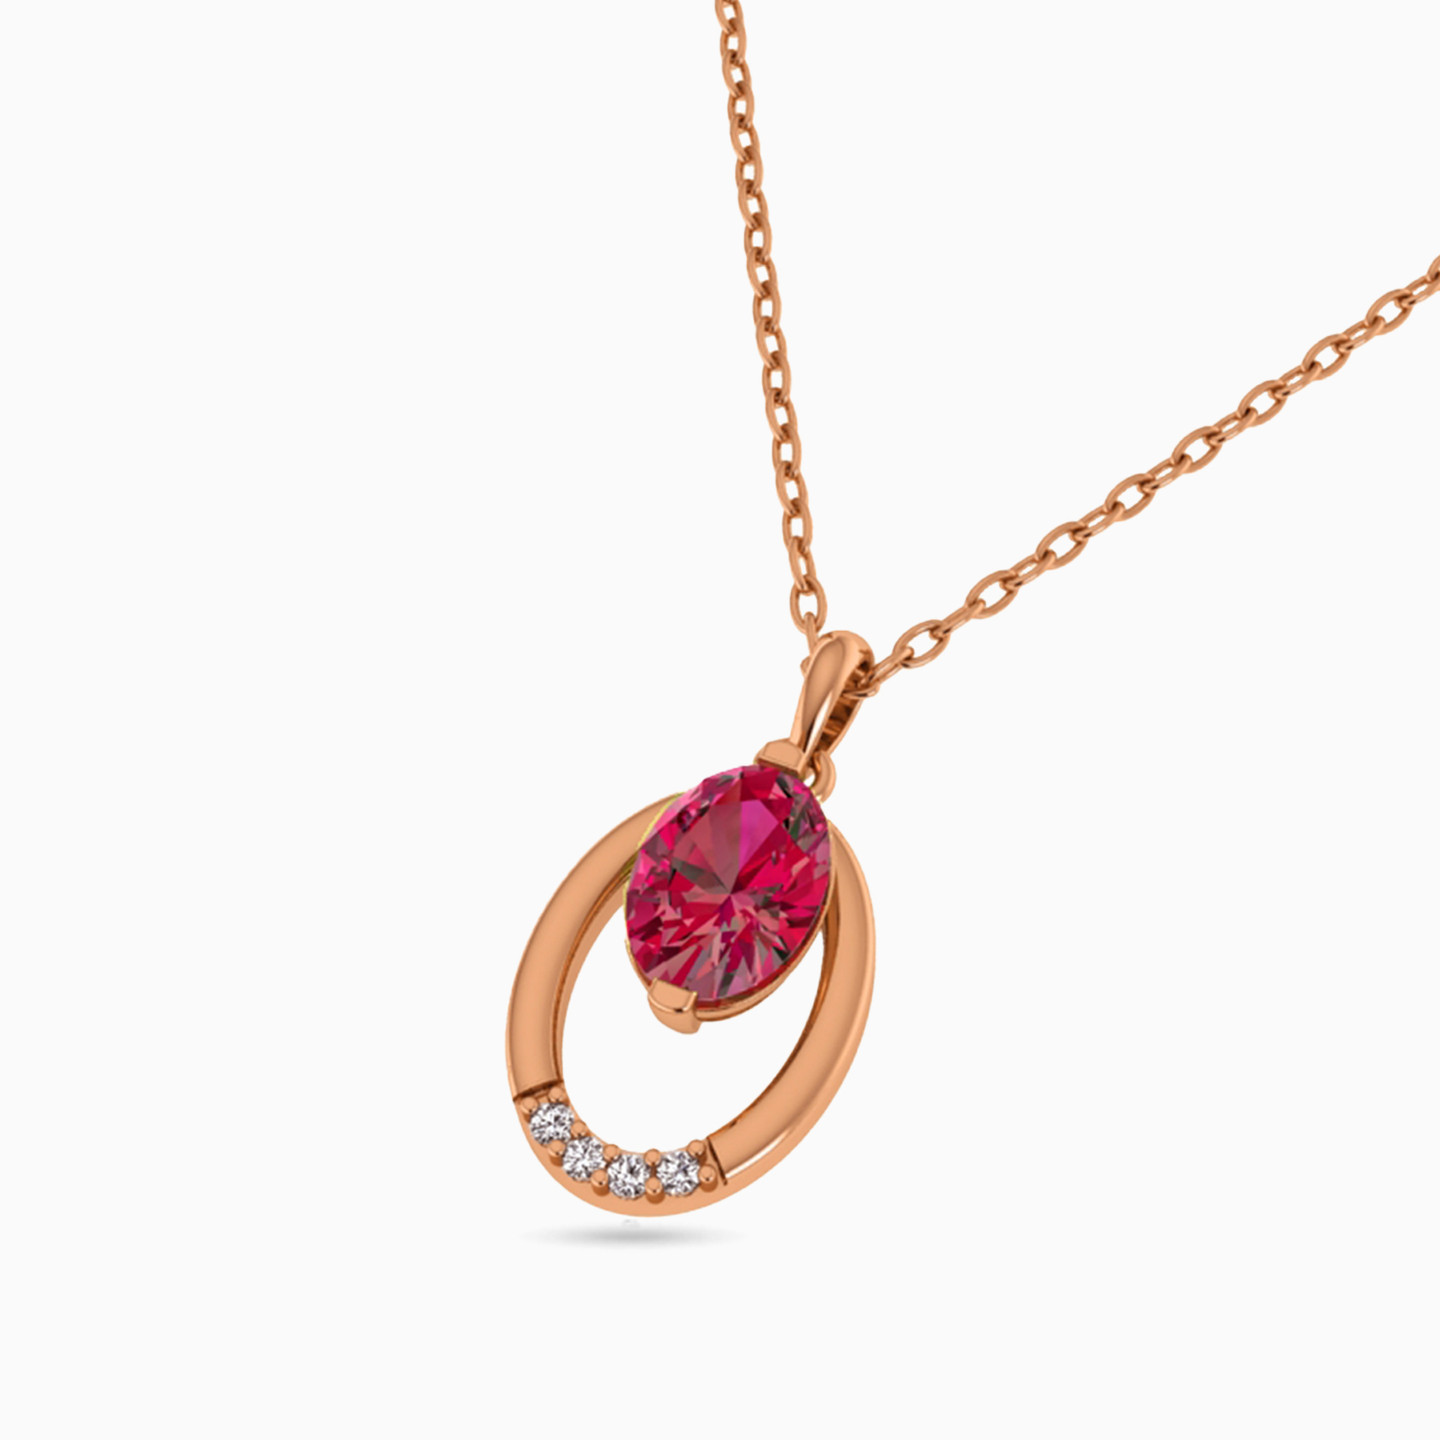 18K Gold Diamond & Colored Stones Pendant Necklace - 2